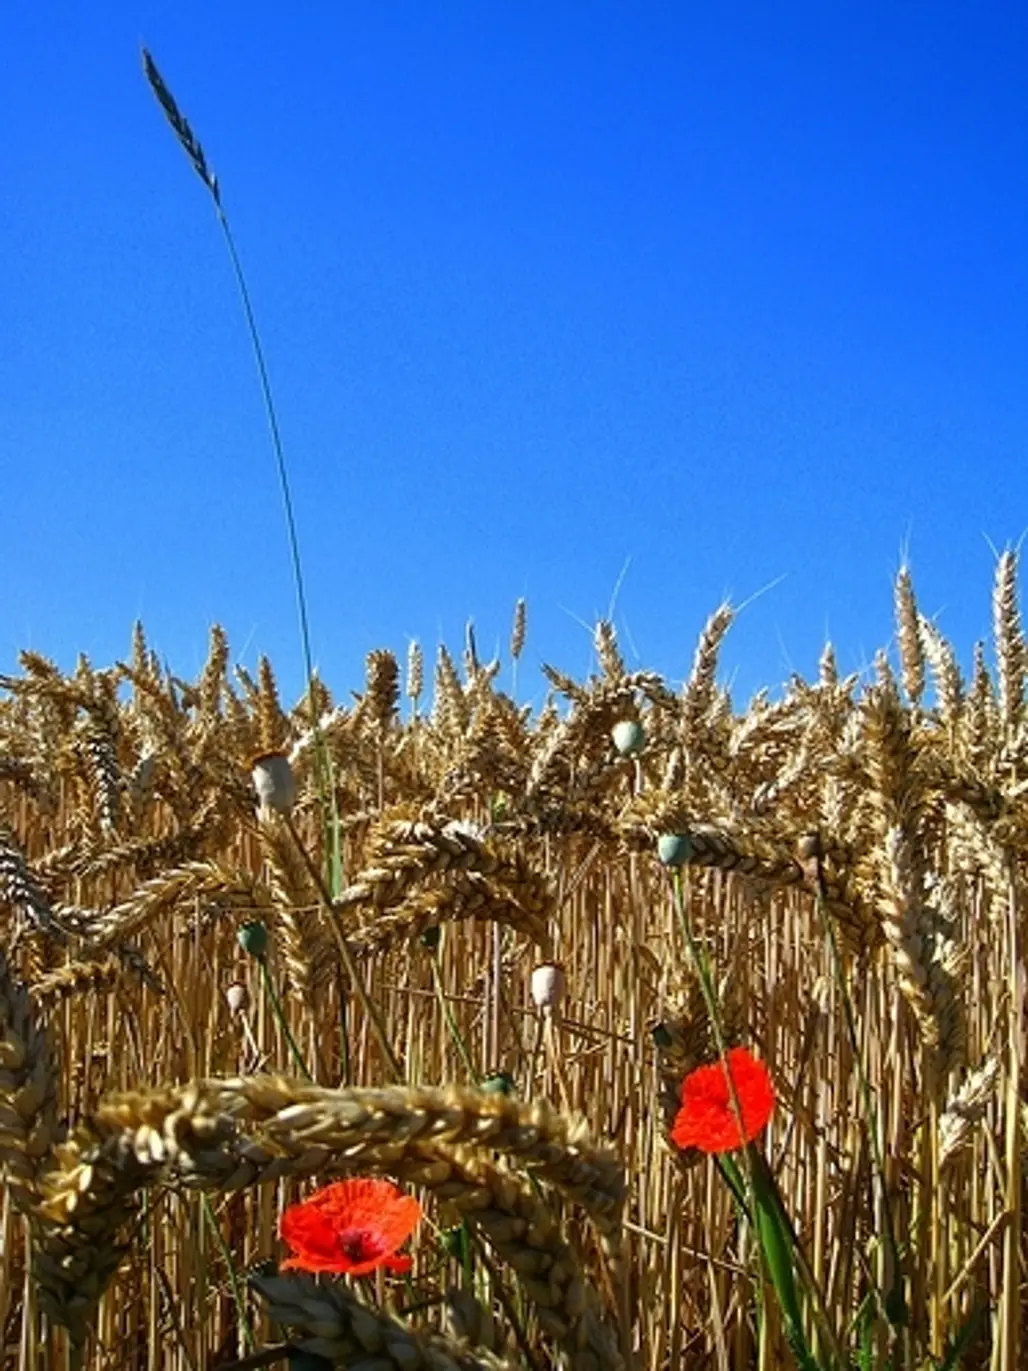 Poppies in a Wheat Field